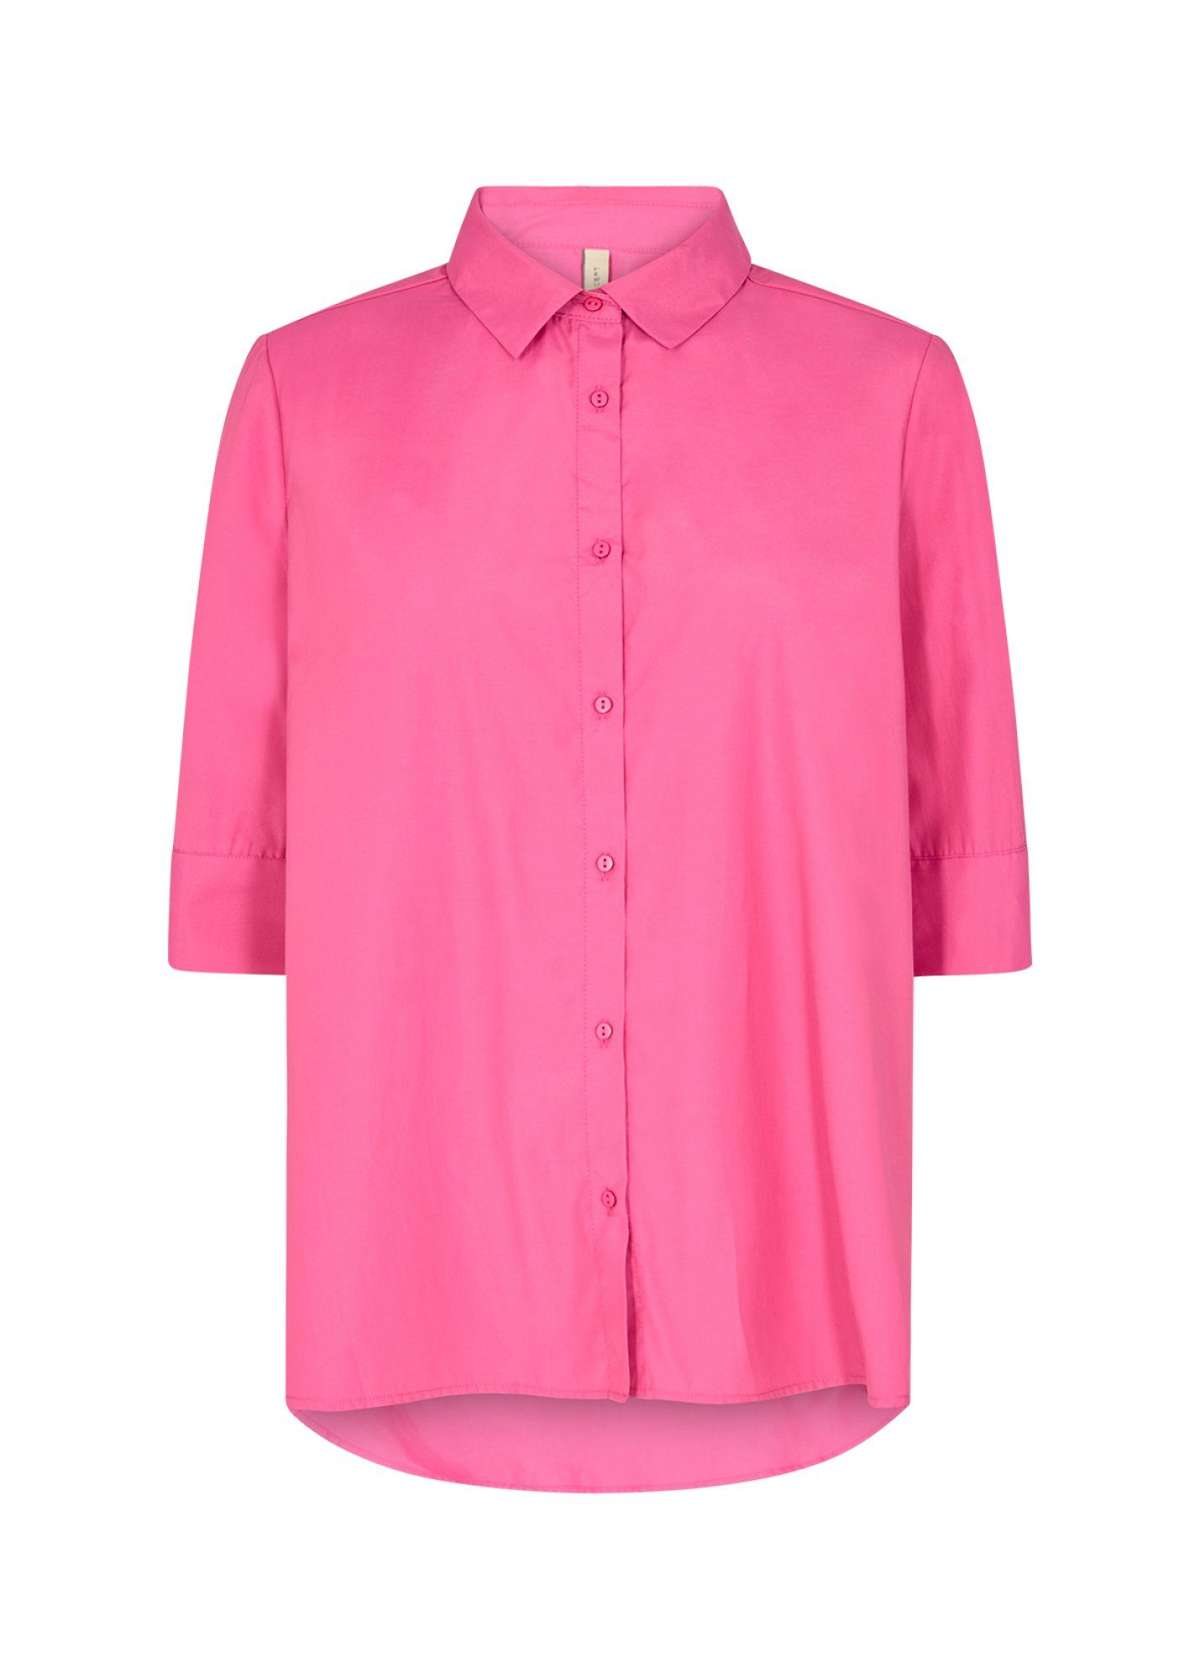 Блузка с коротким рукавом розового цвета из текстиля (1 шт.)